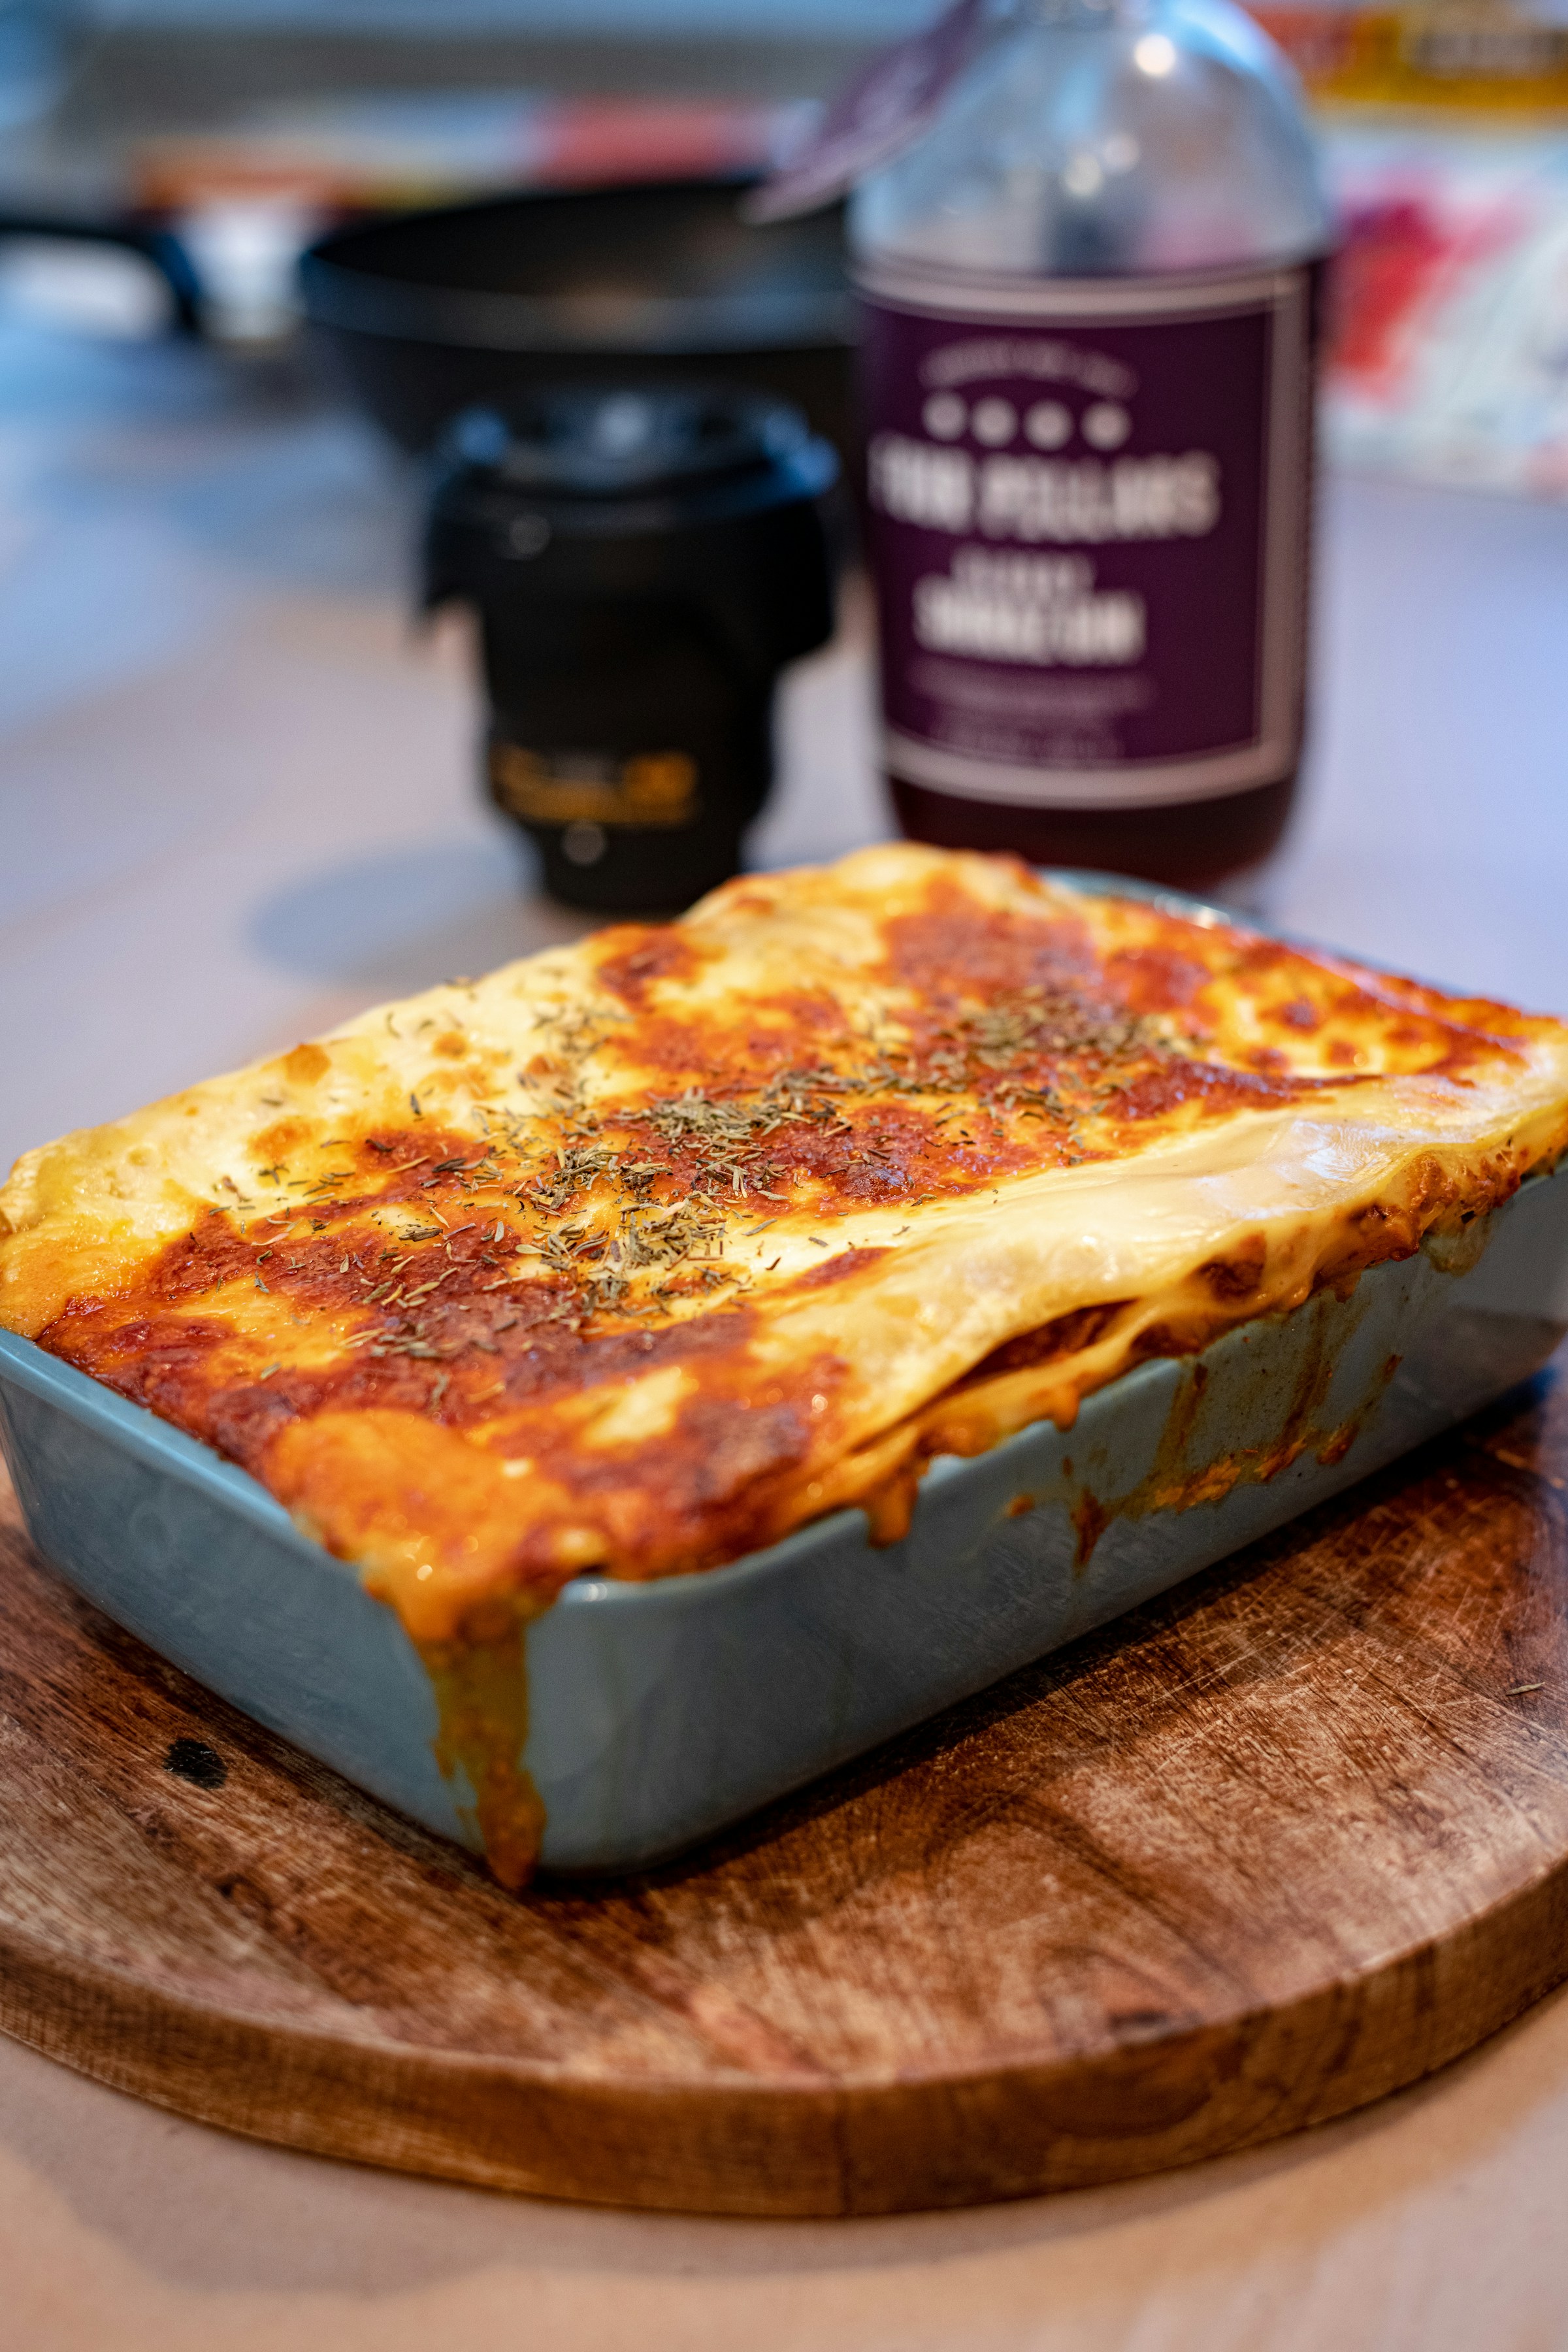 A tray of lasagna on a board | Source: Unsplash